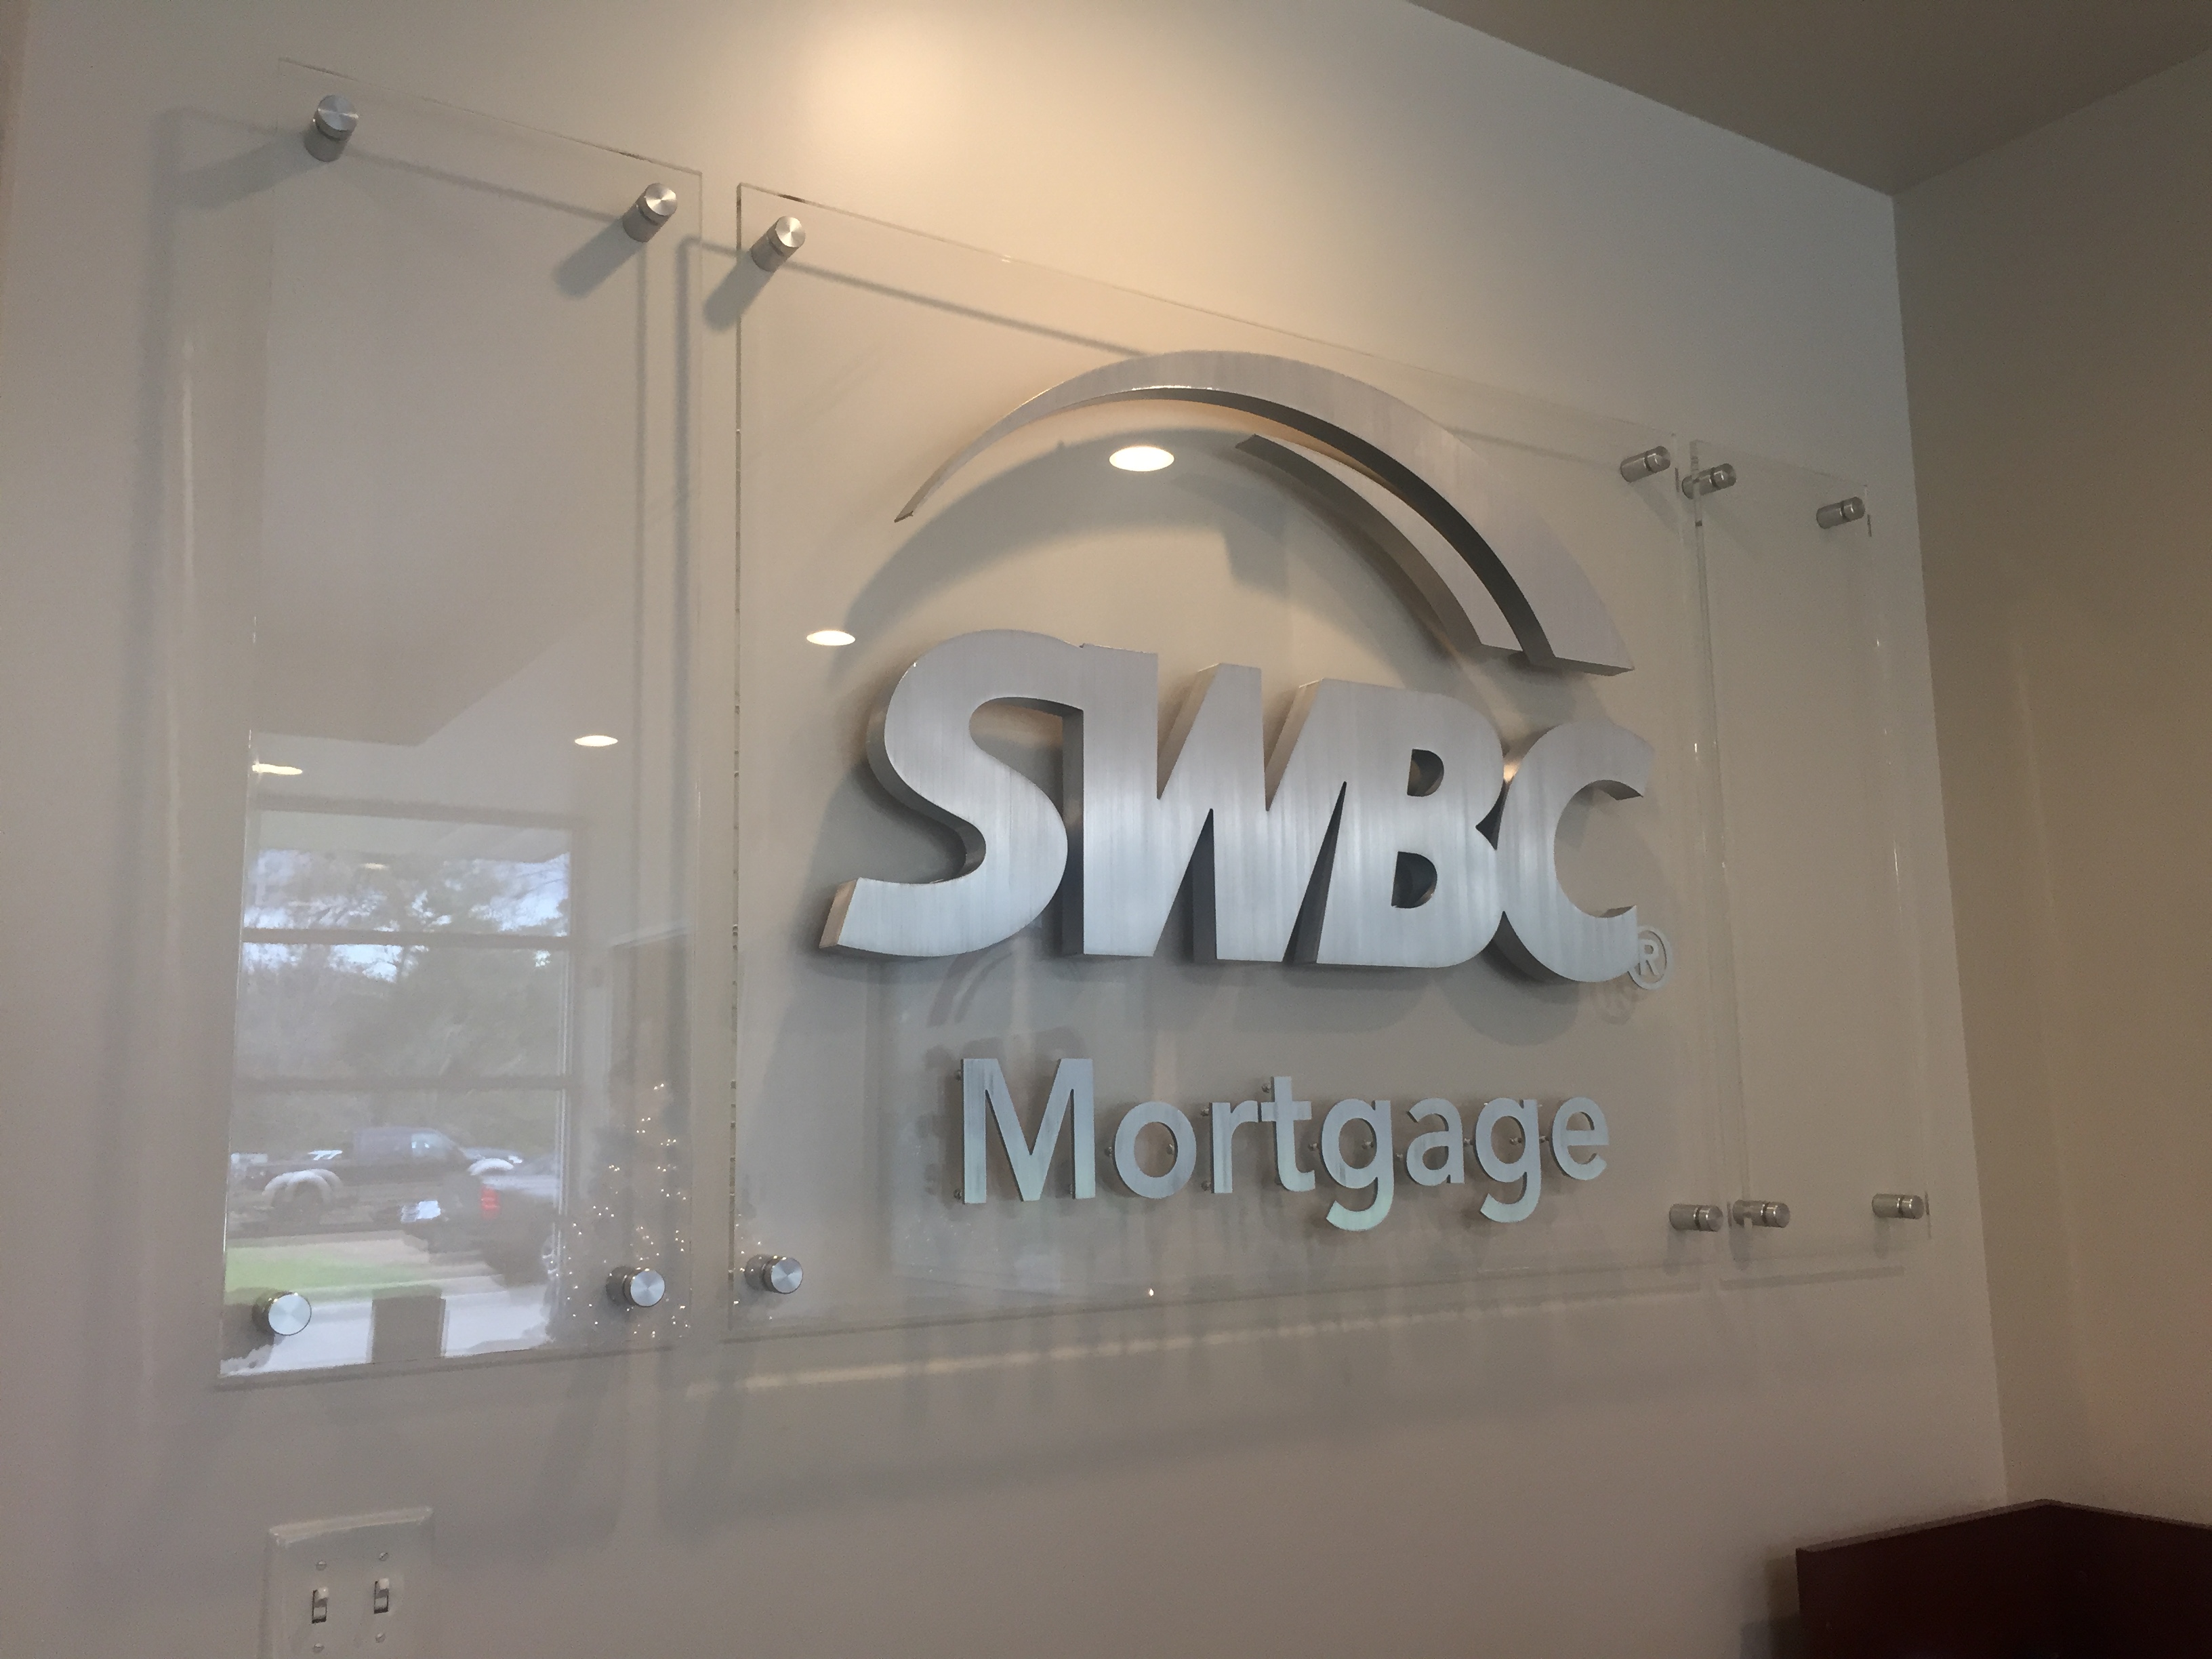 SWBC Mortgage reception sign